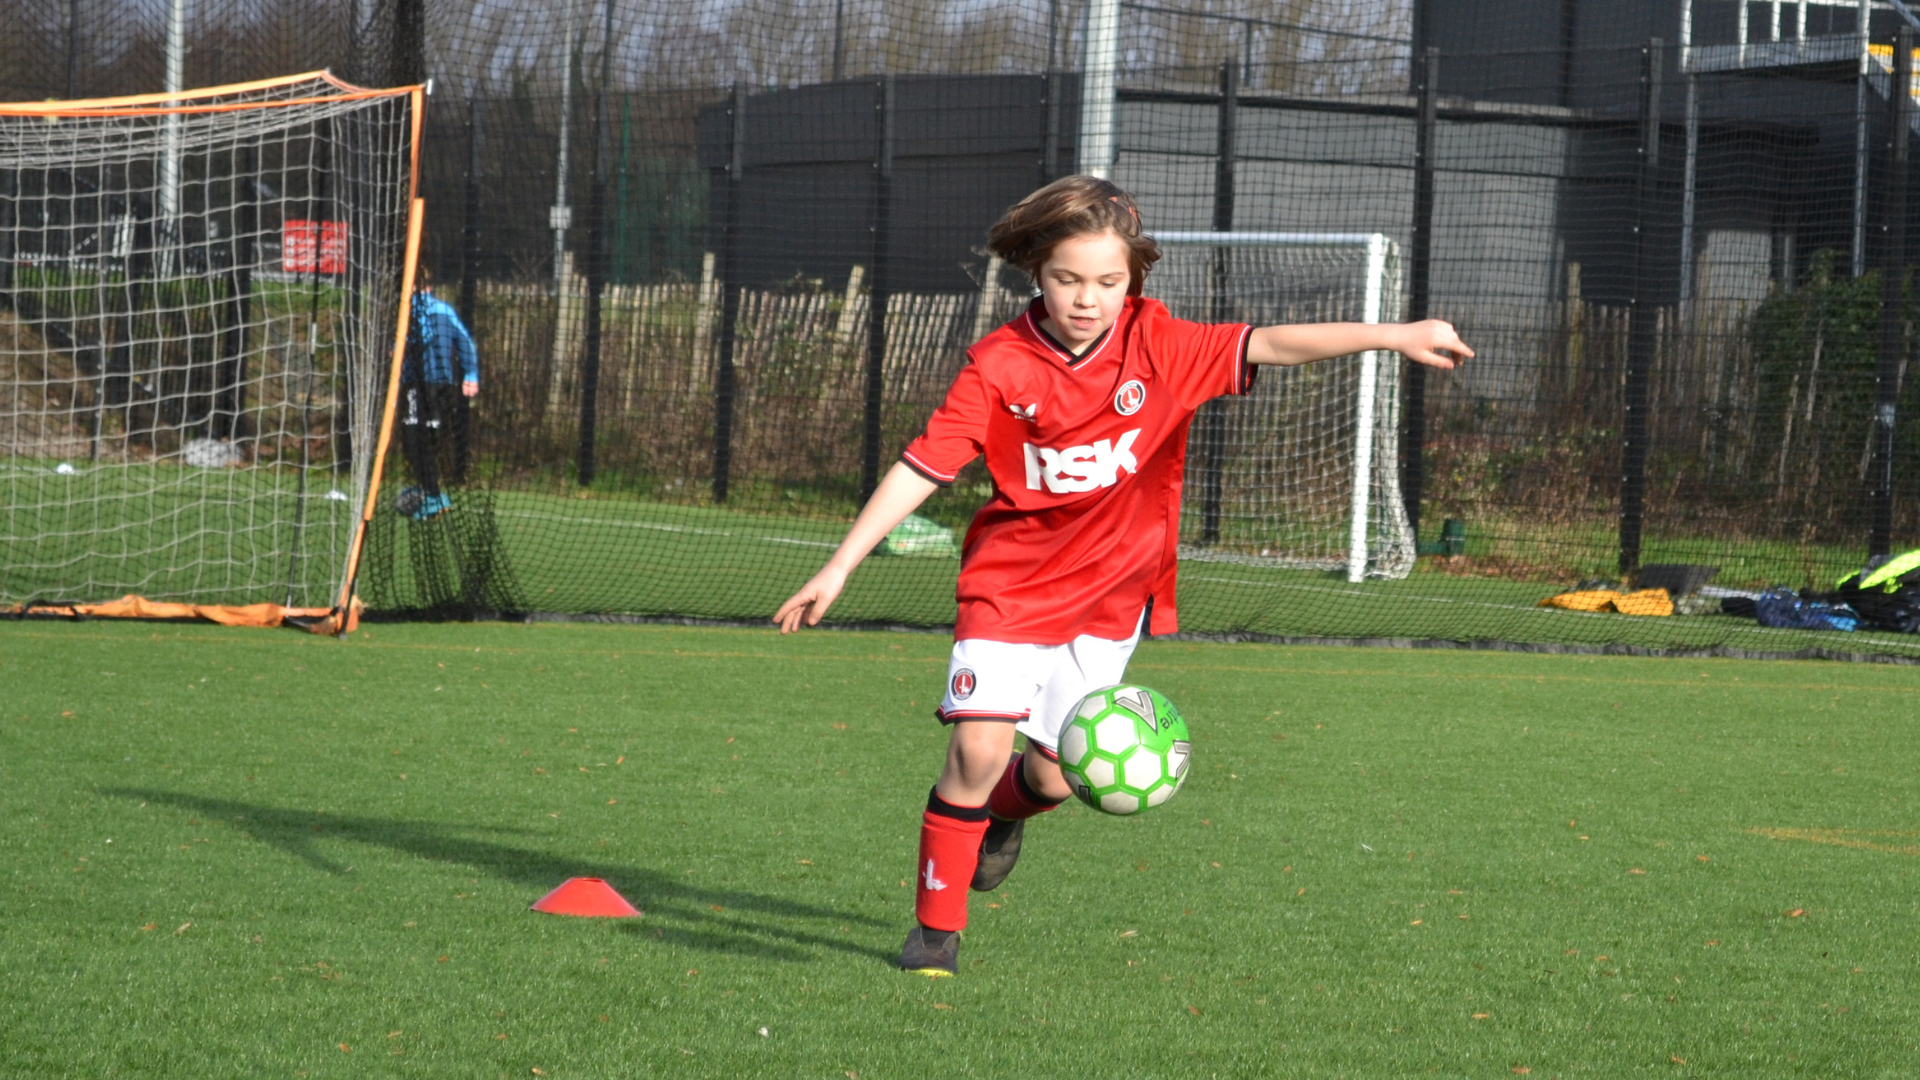 Young girl kicking a ball in Charlton kit